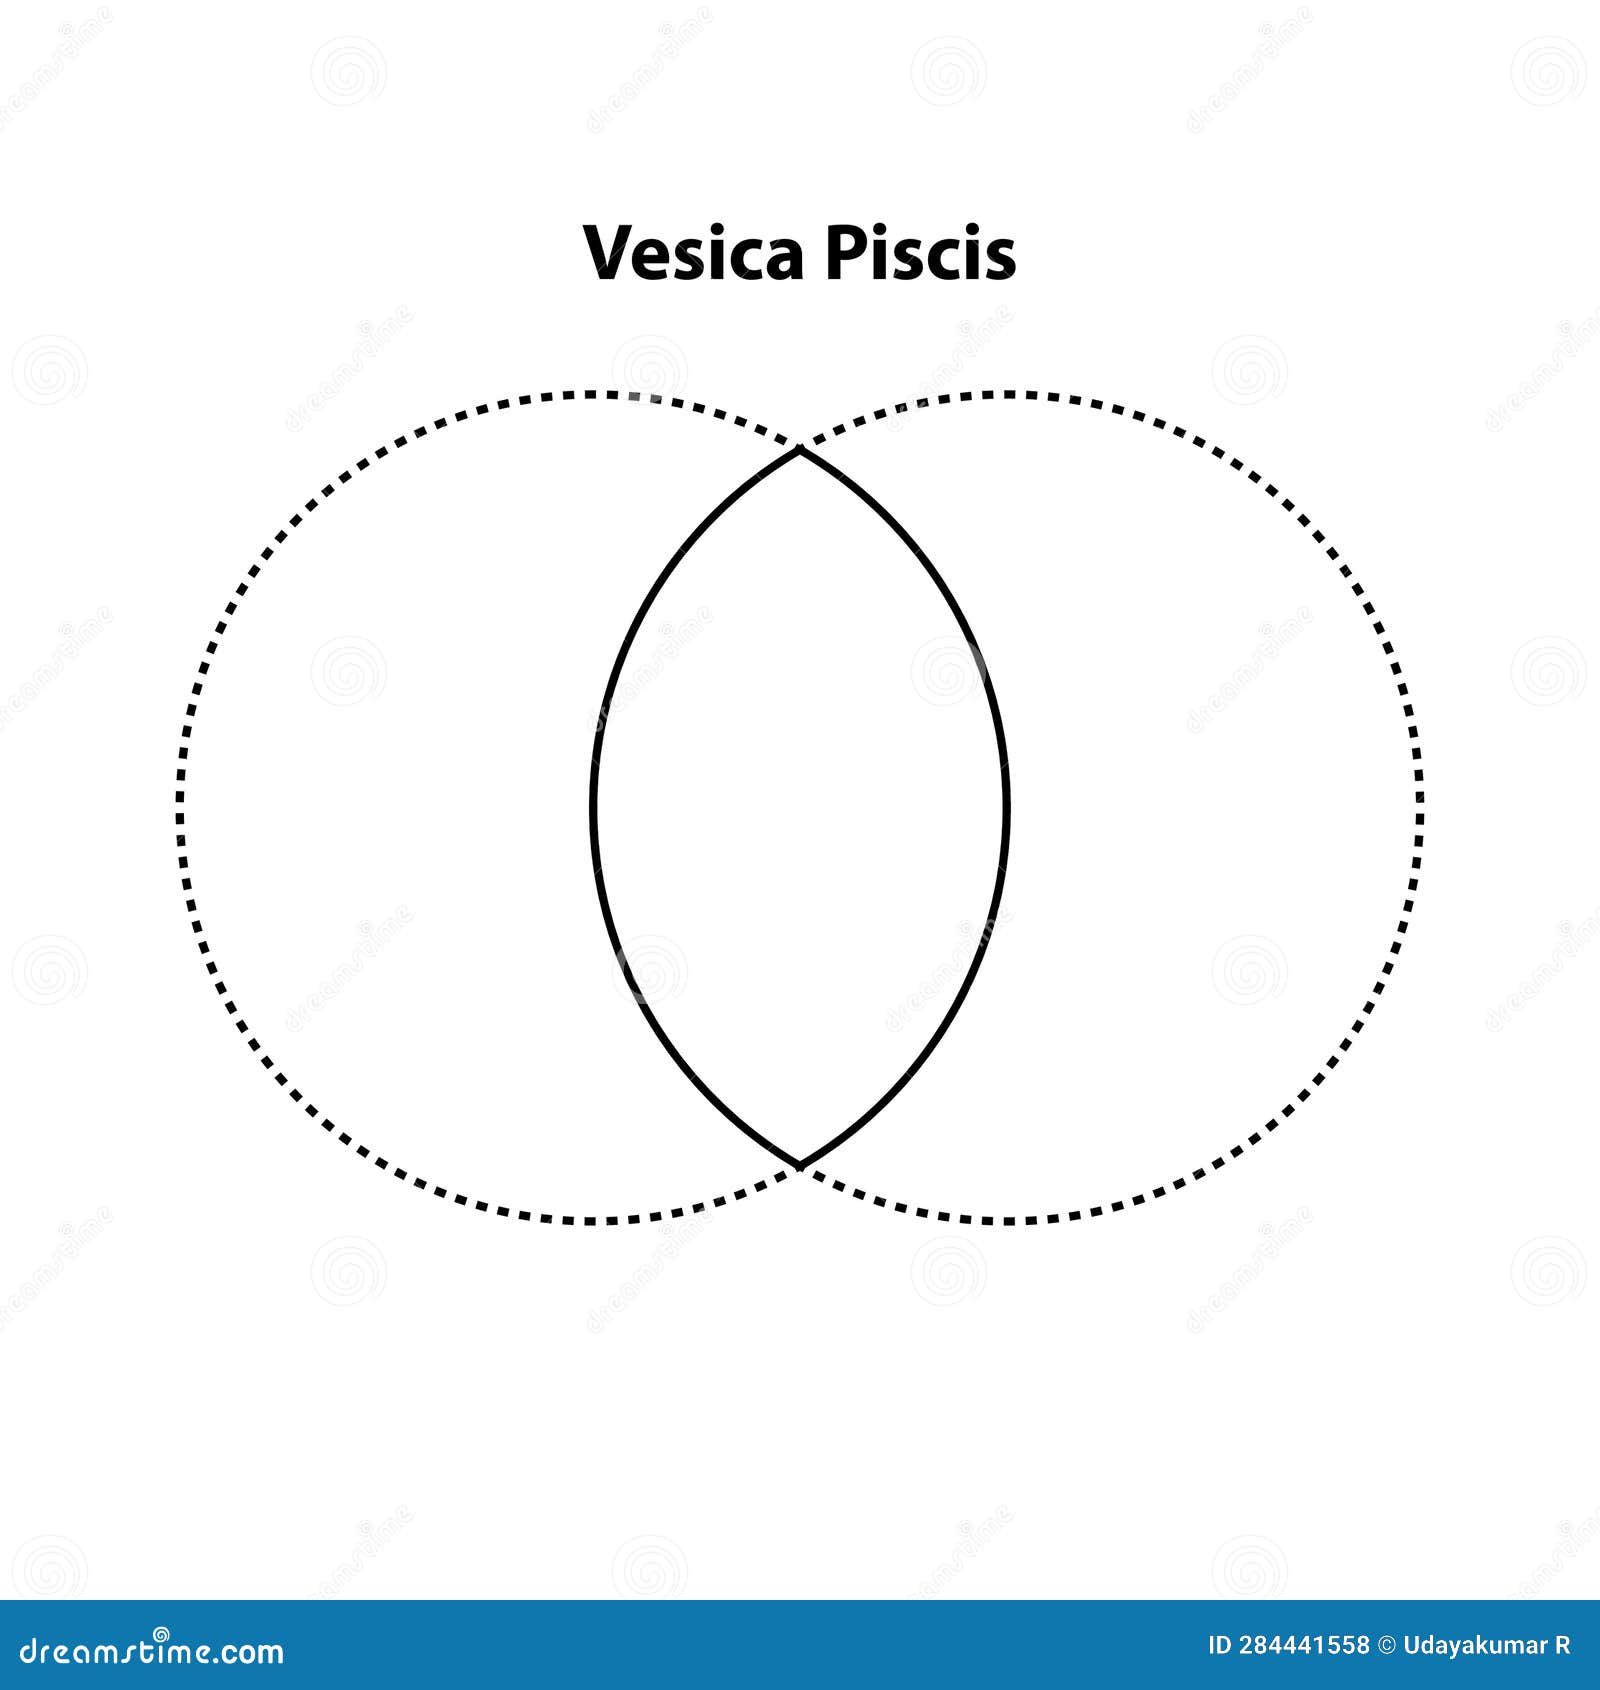 visica piscis. sacred geometry   s.